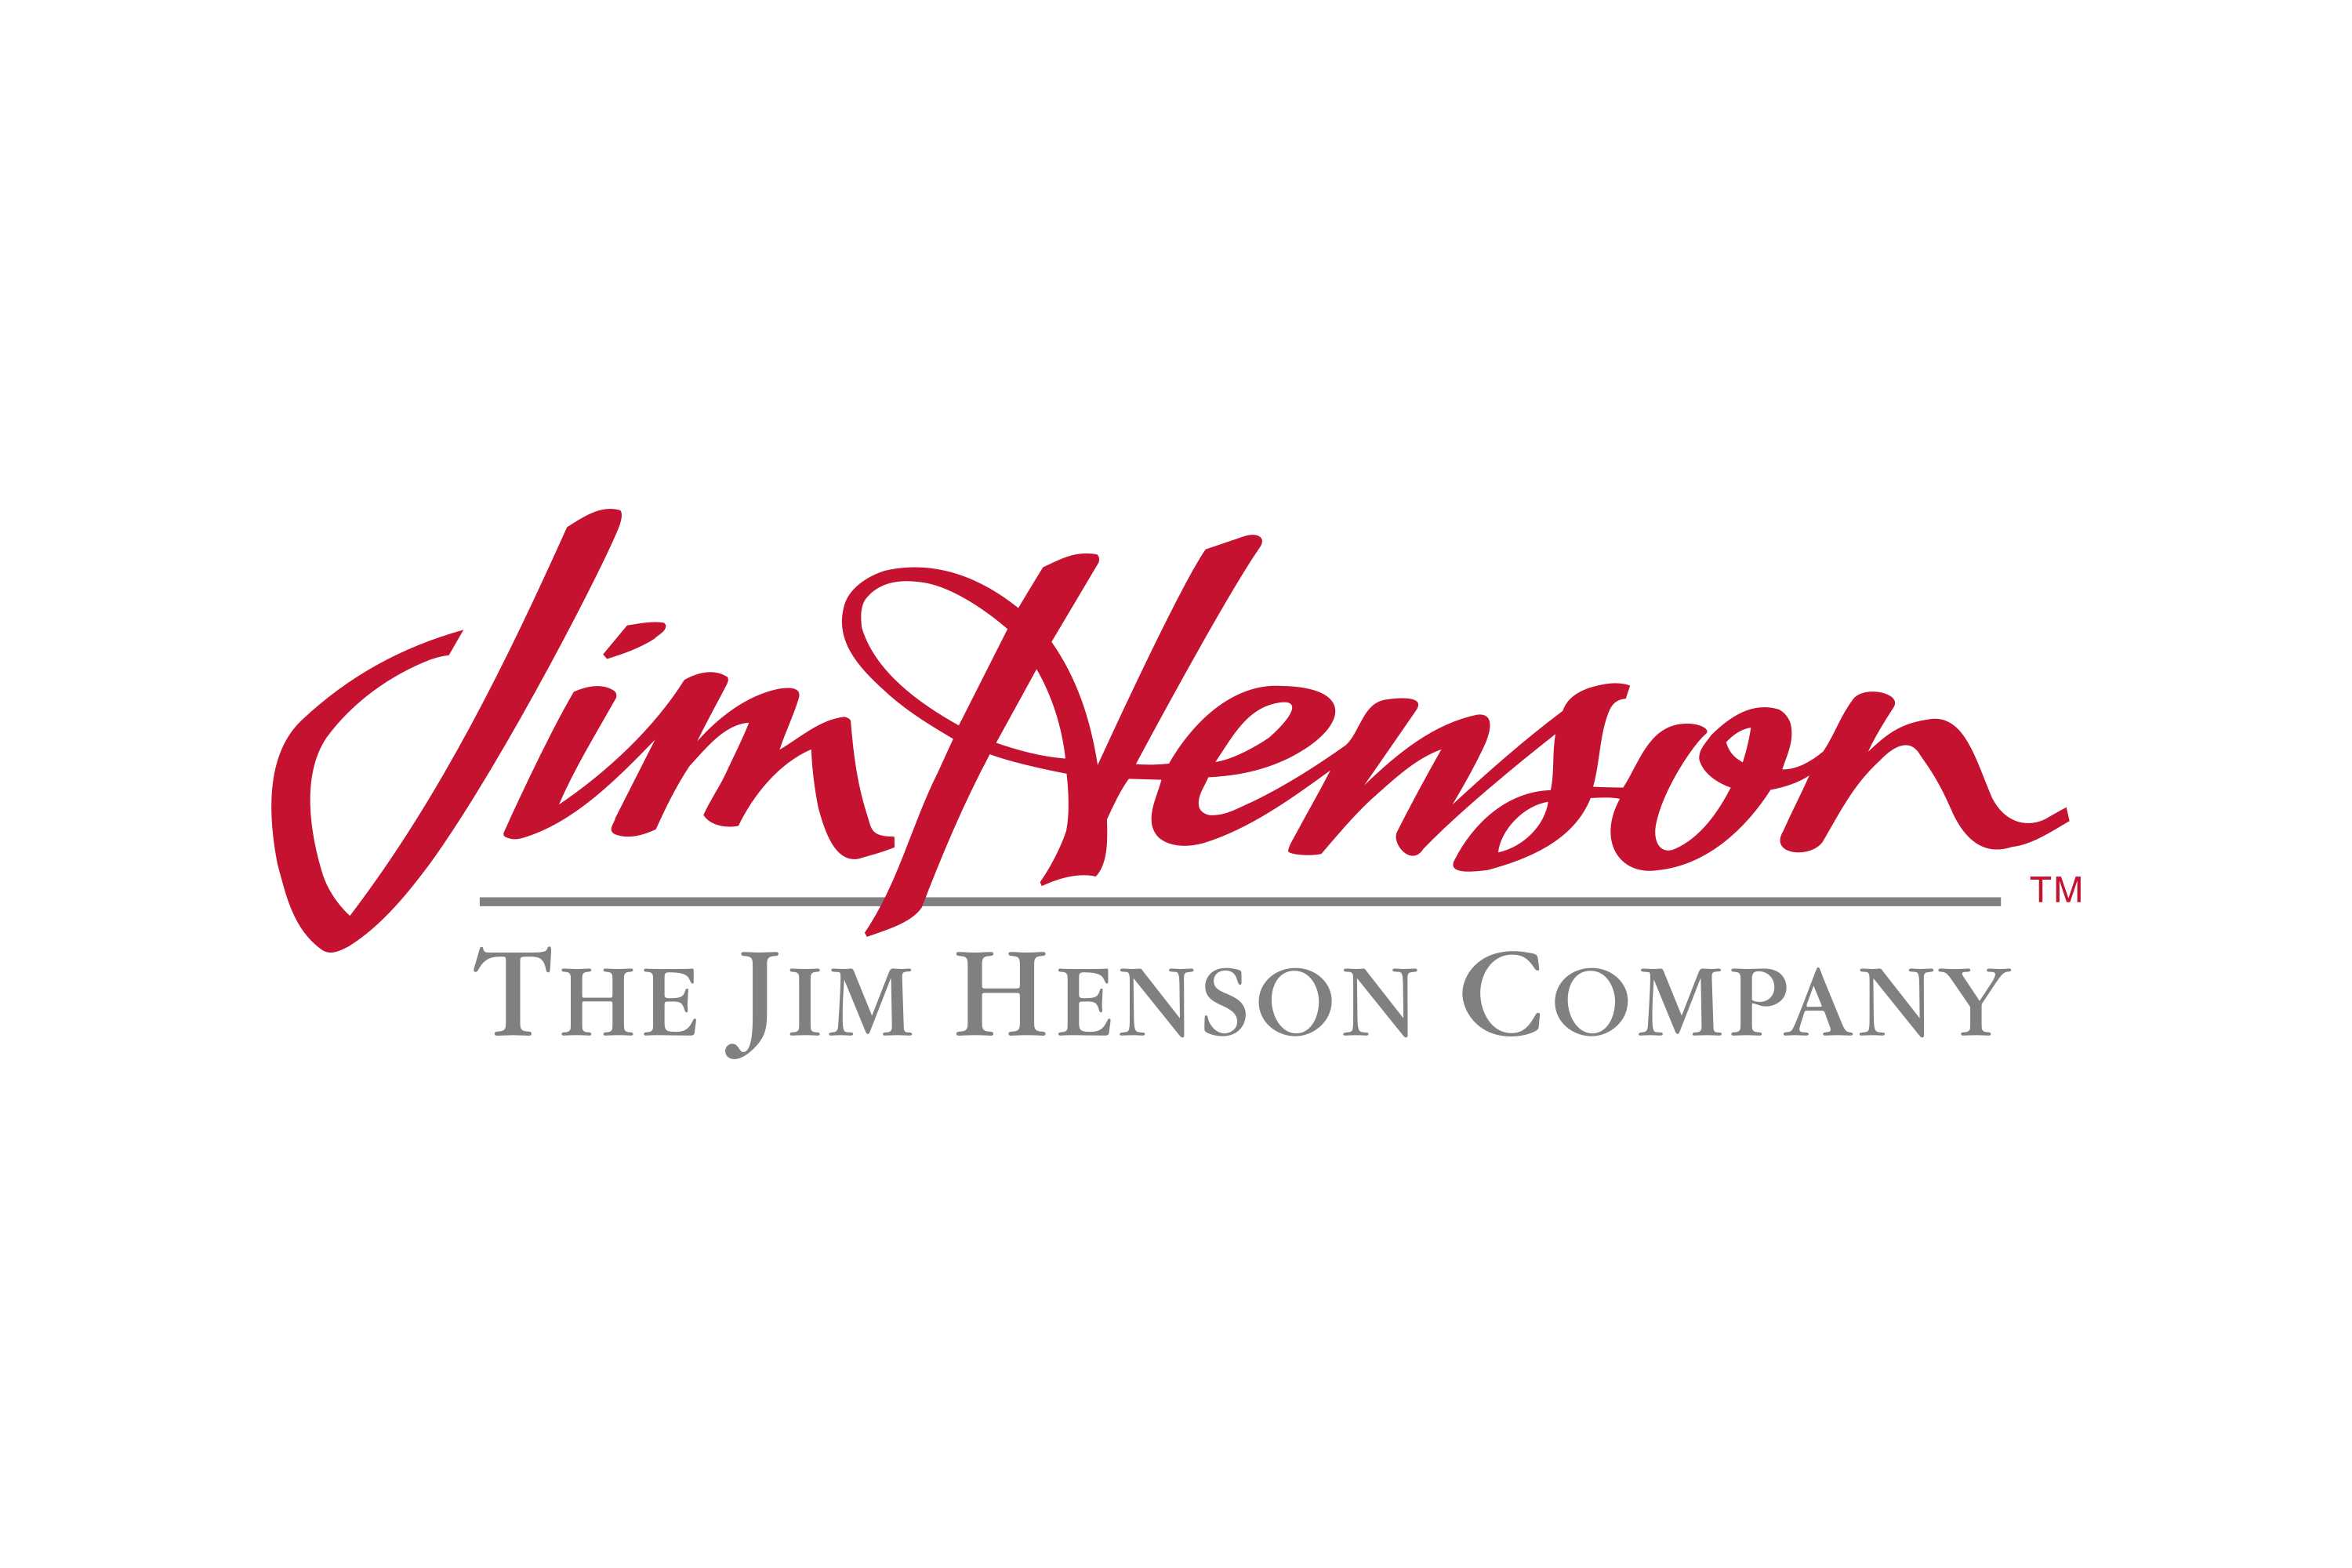 Jim Henson Pictures Logo Significado Del Logotipo Png Vector | Images ...